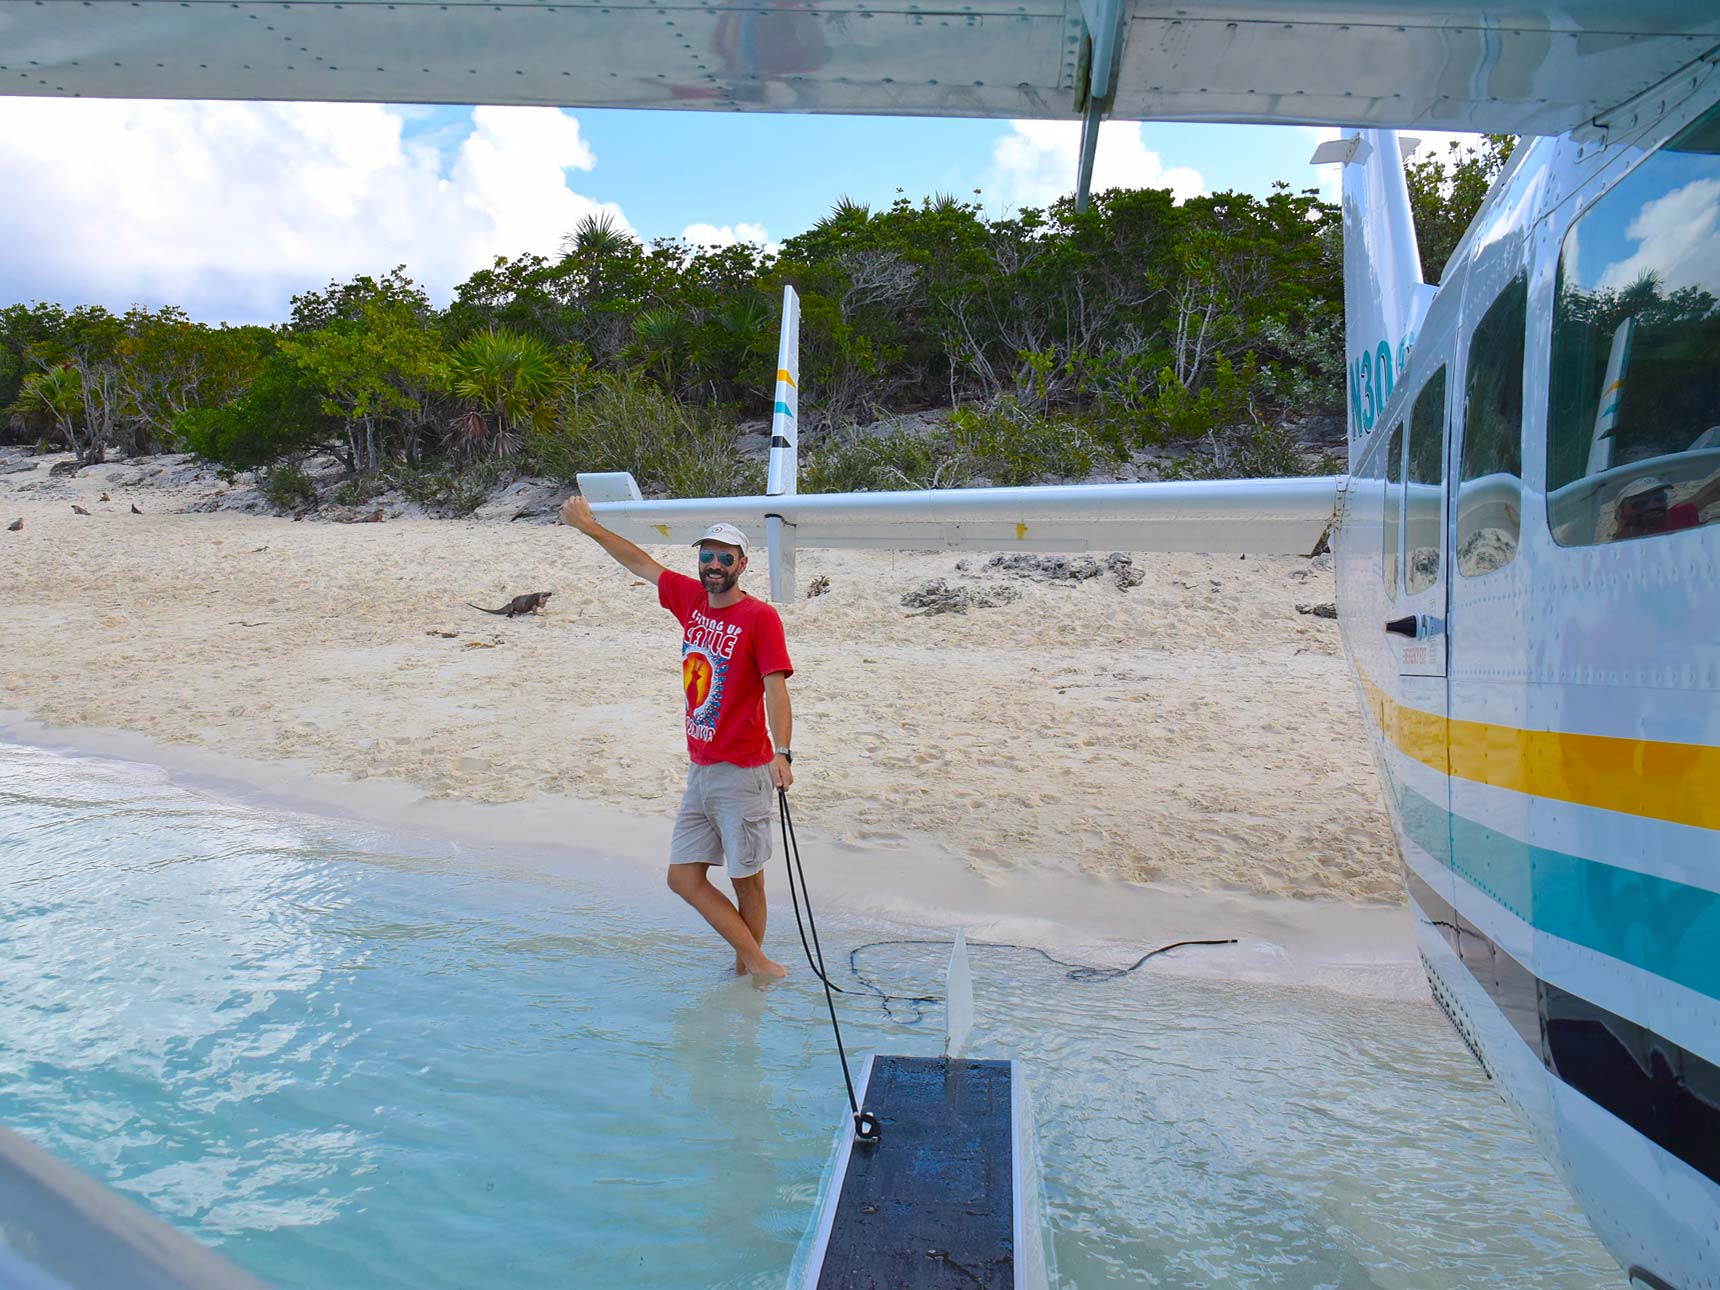 Seabird Air Seaplane Charters servicing The Bahamas